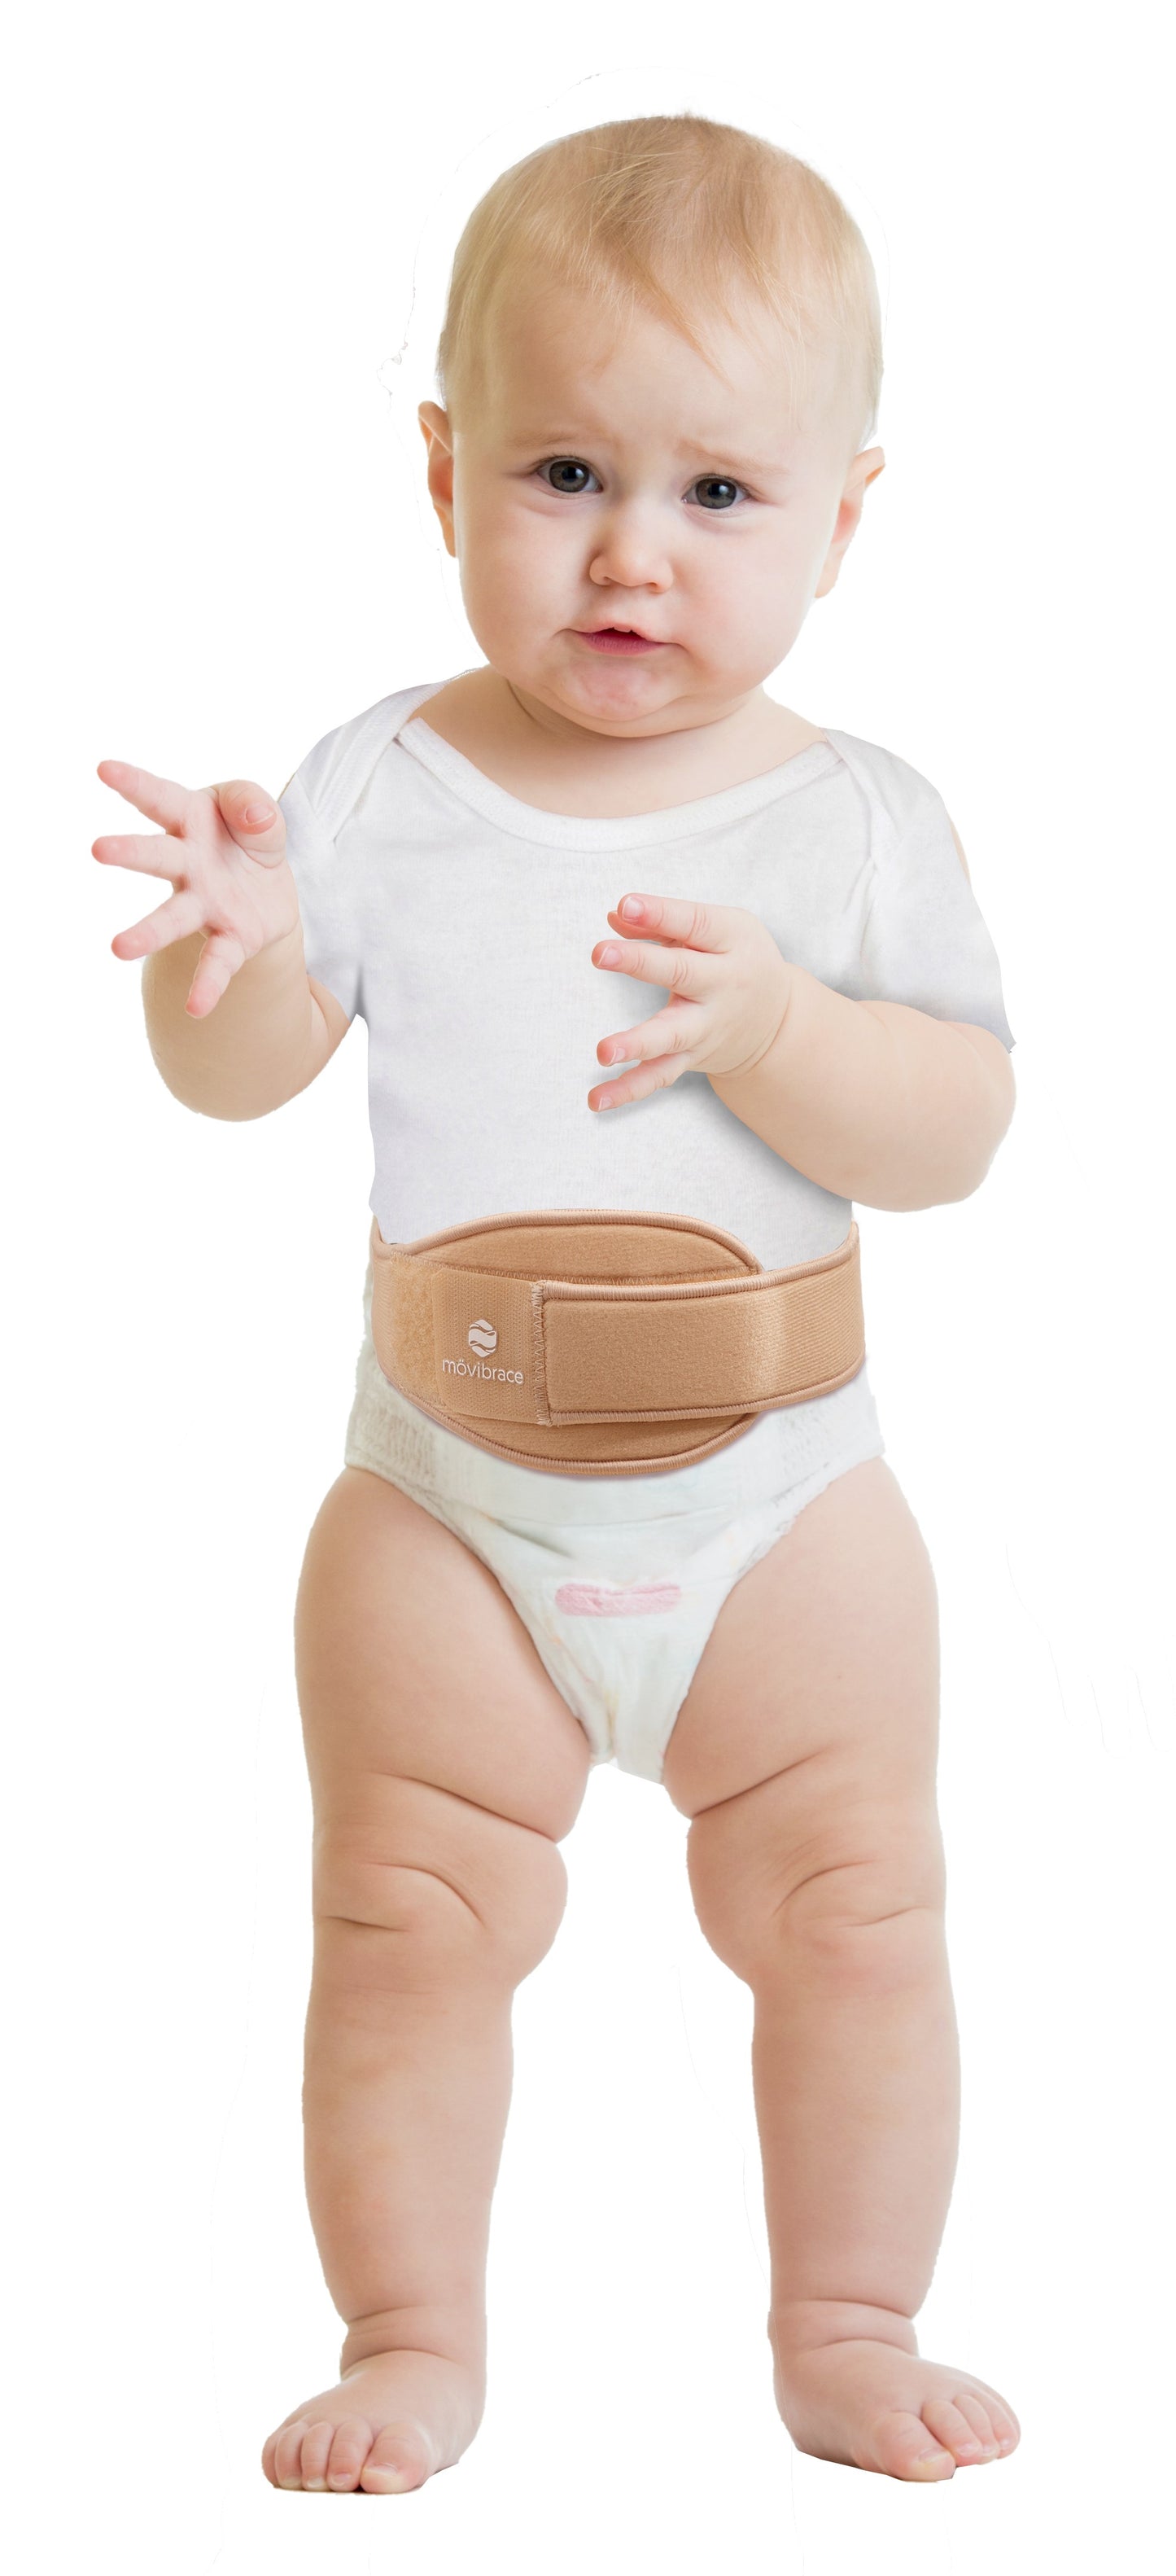 Mövibrace Infant and Child Umbilical Navel Hernia Brace